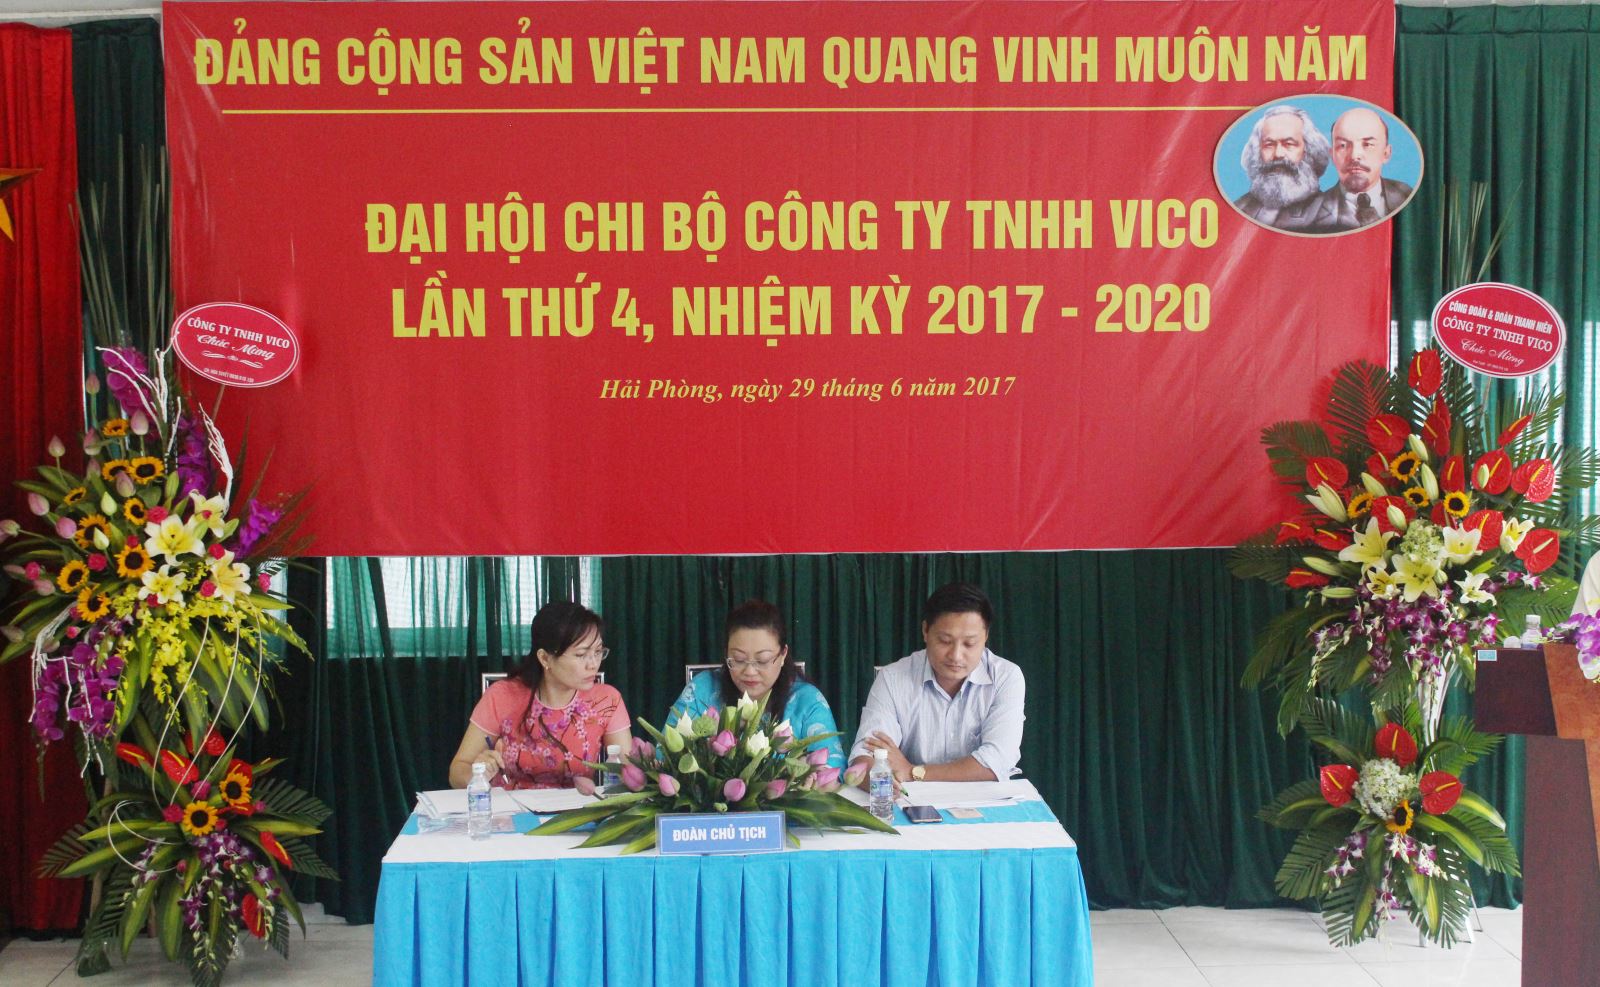 Dai hoi chi bo cong ty VICO lan thu 4 nhiem ki 2017 - 2020